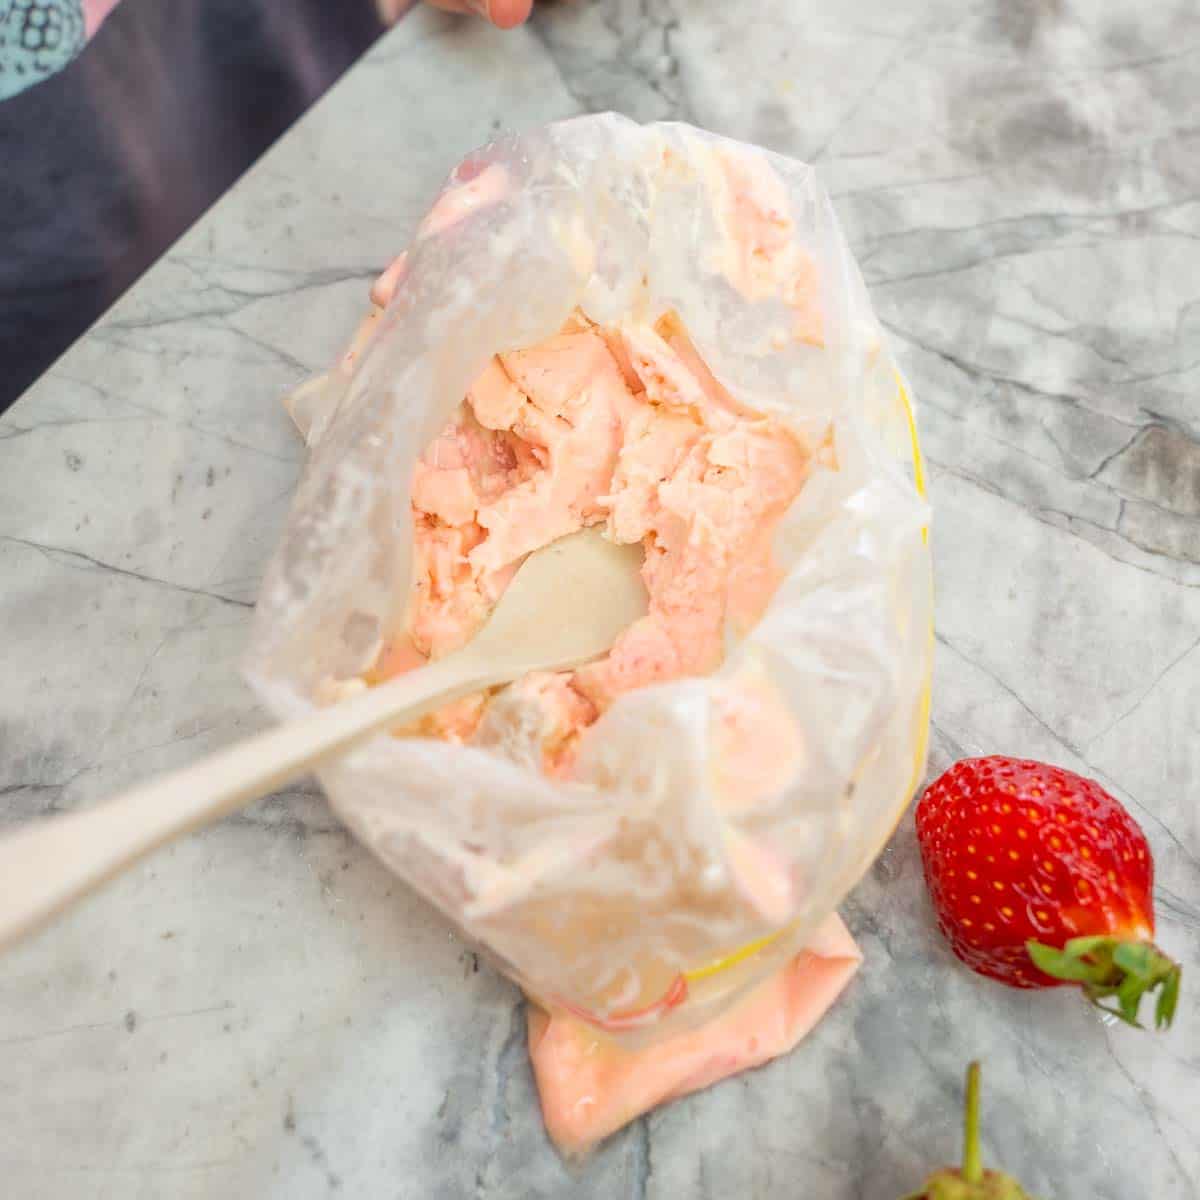 Strawberry ice cream in a zip lock bag.